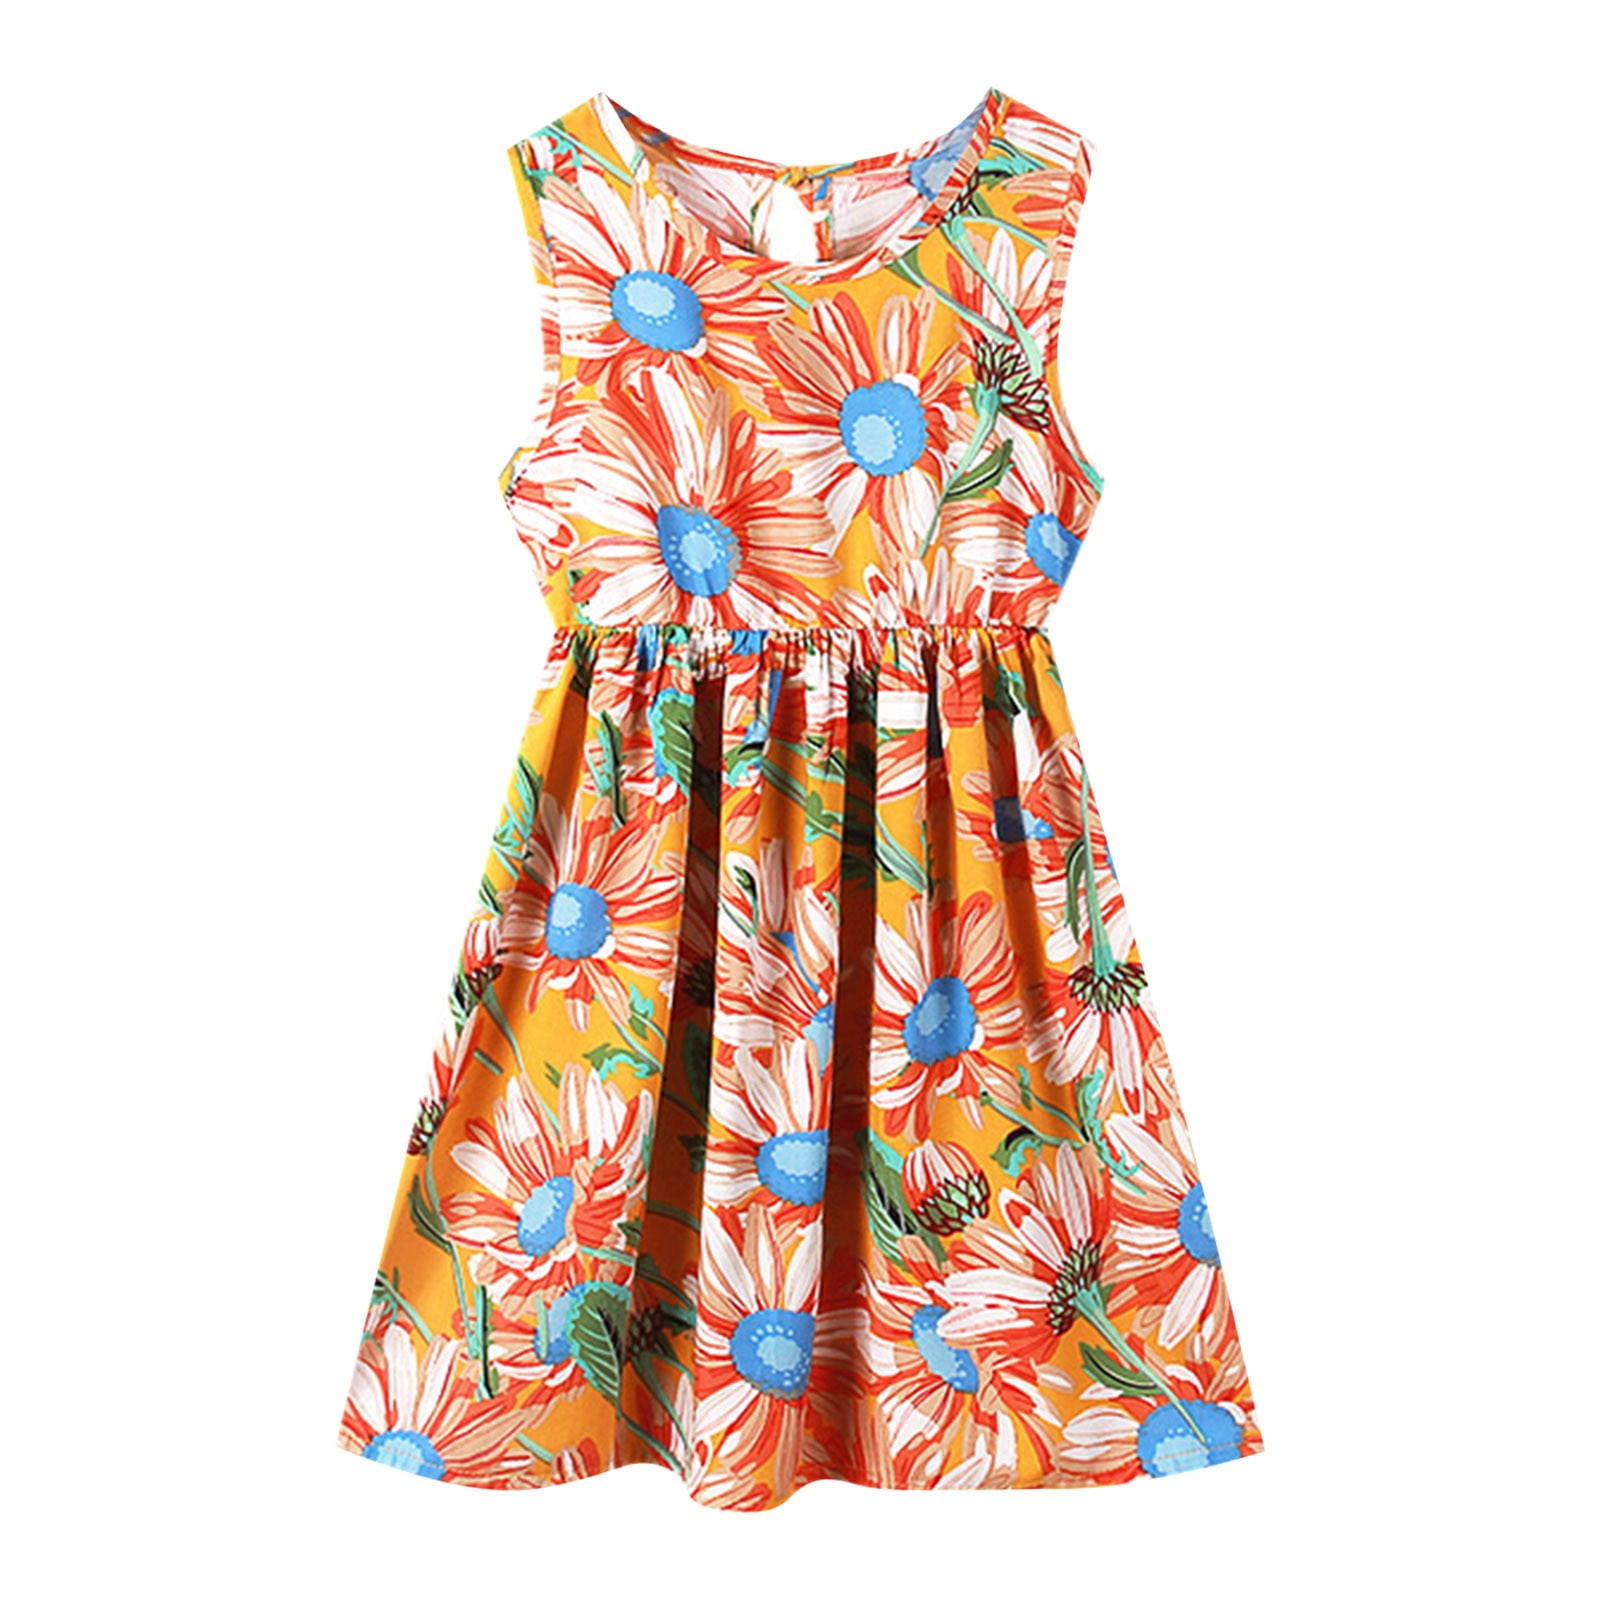 ZRBYWB Girls Dresses Summer Dress Fruit Floral Print Sleeveless Casual ...